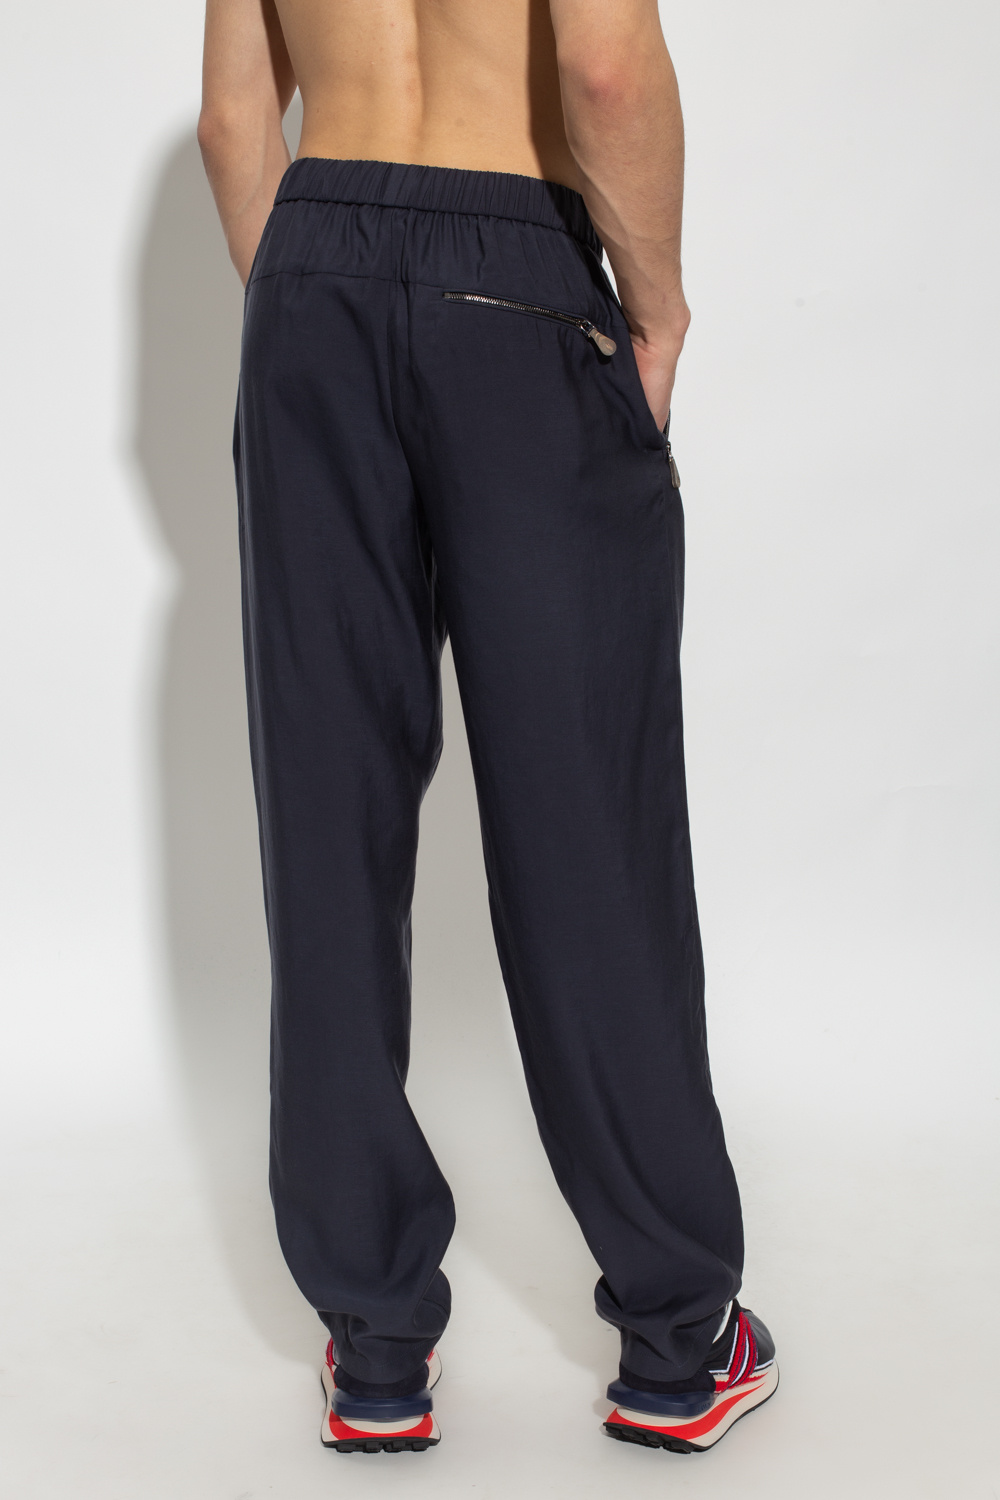 Giorgio Armani ‘Sustainable’ collection Erika trousers